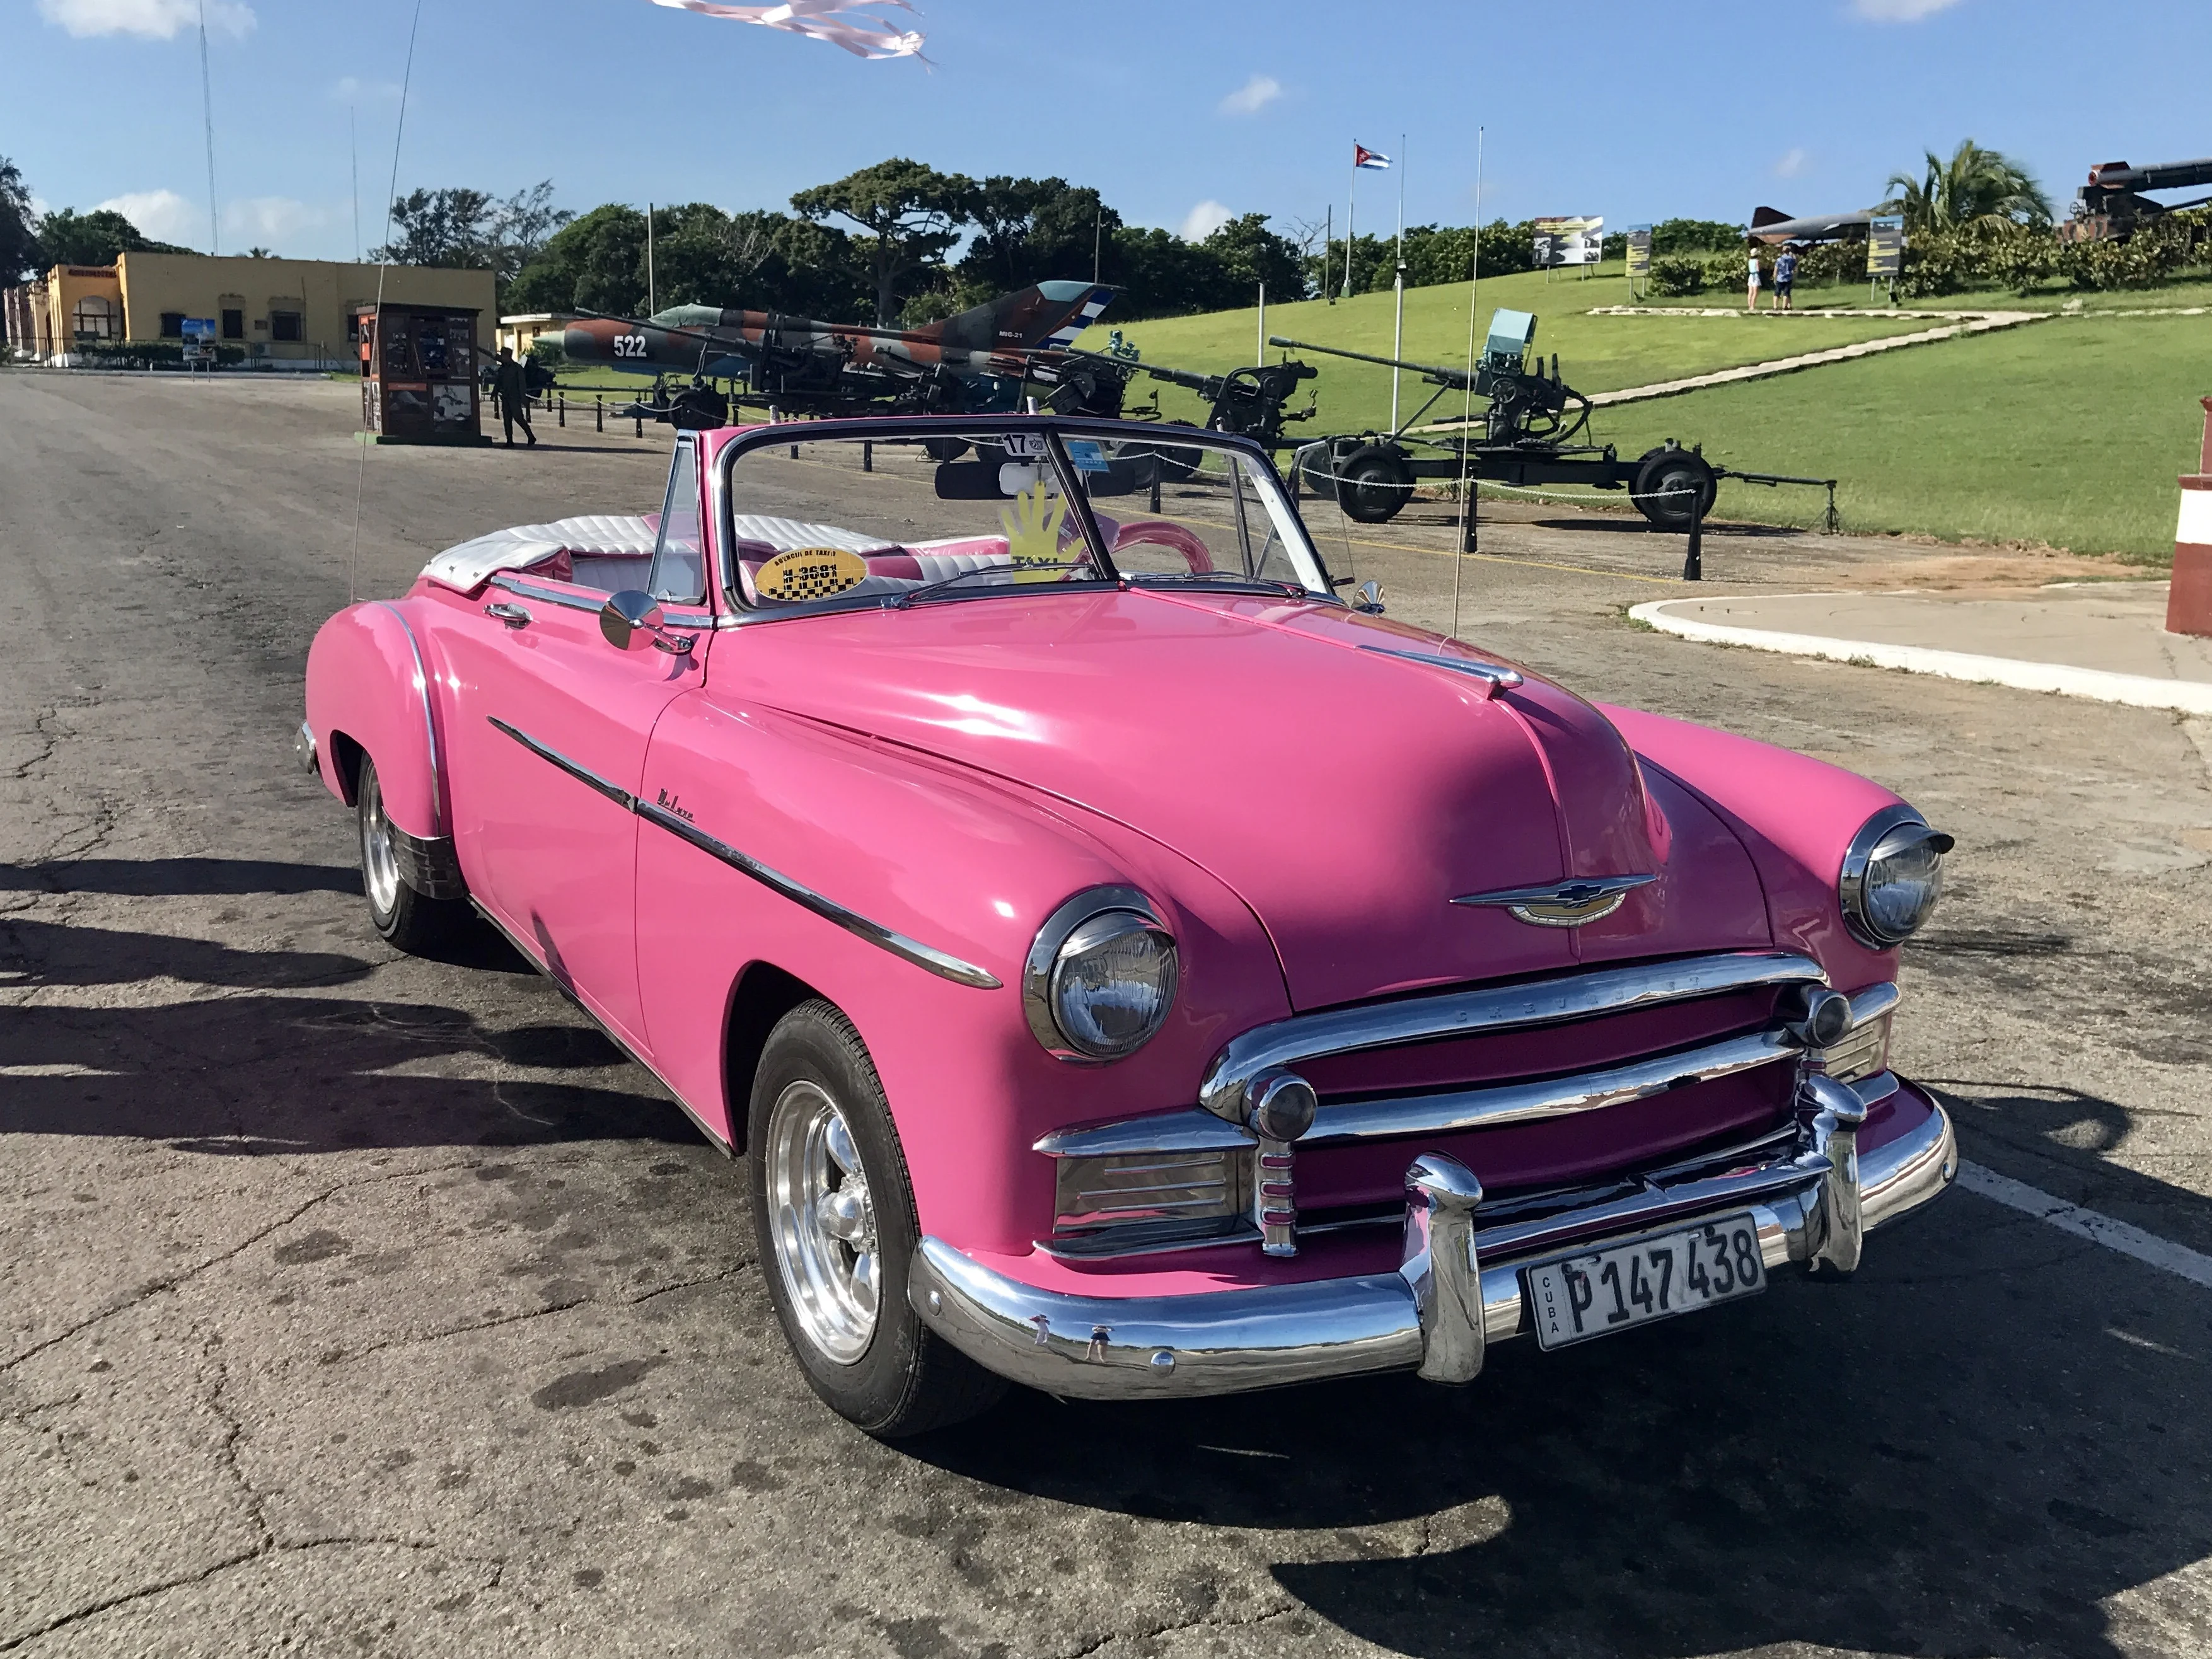 car tour, Havana